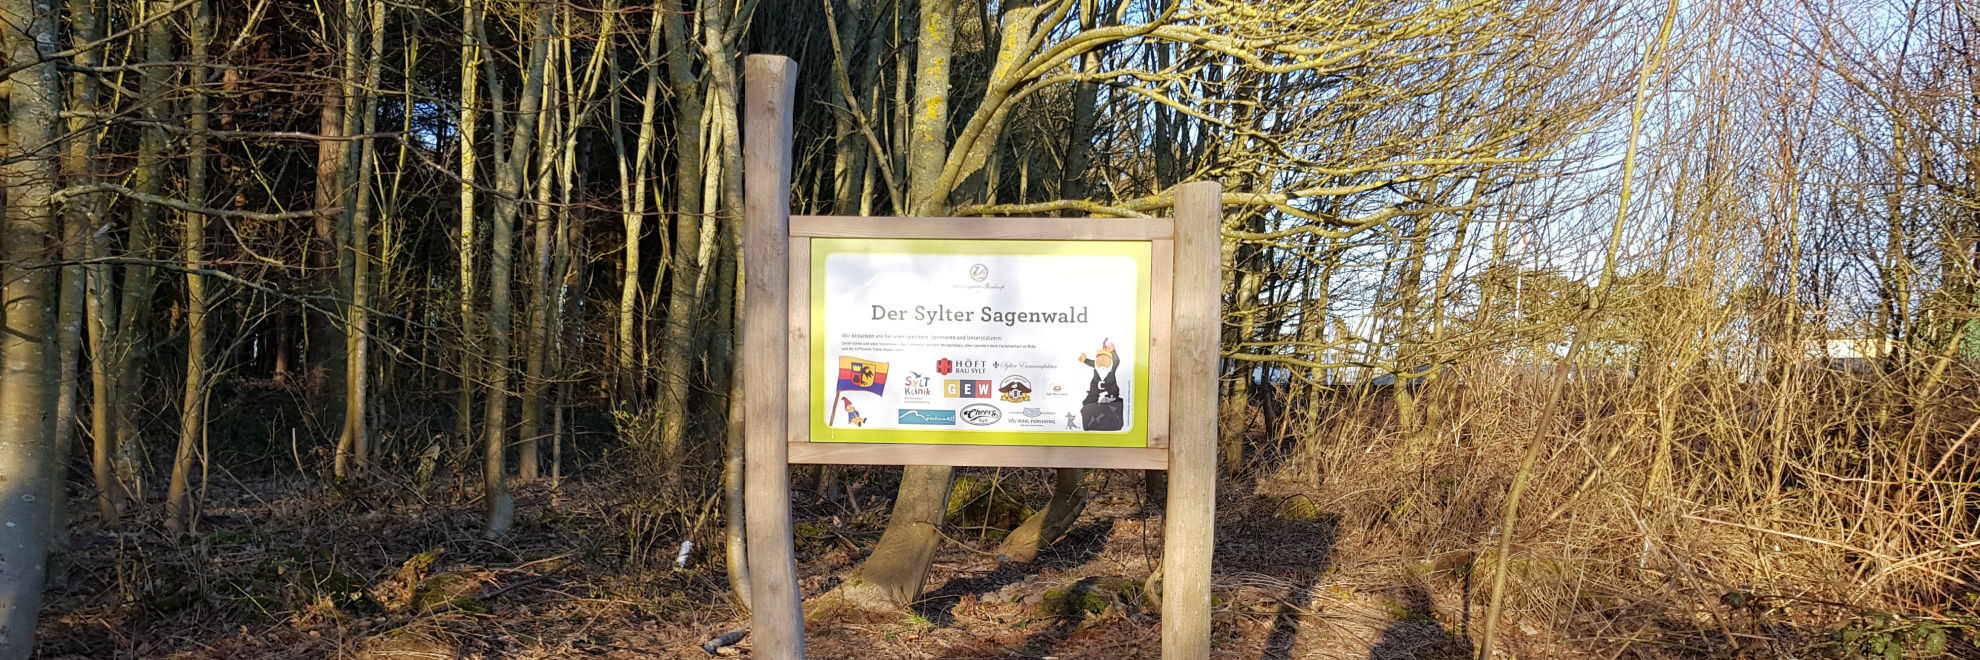 Sylter Sagenwald